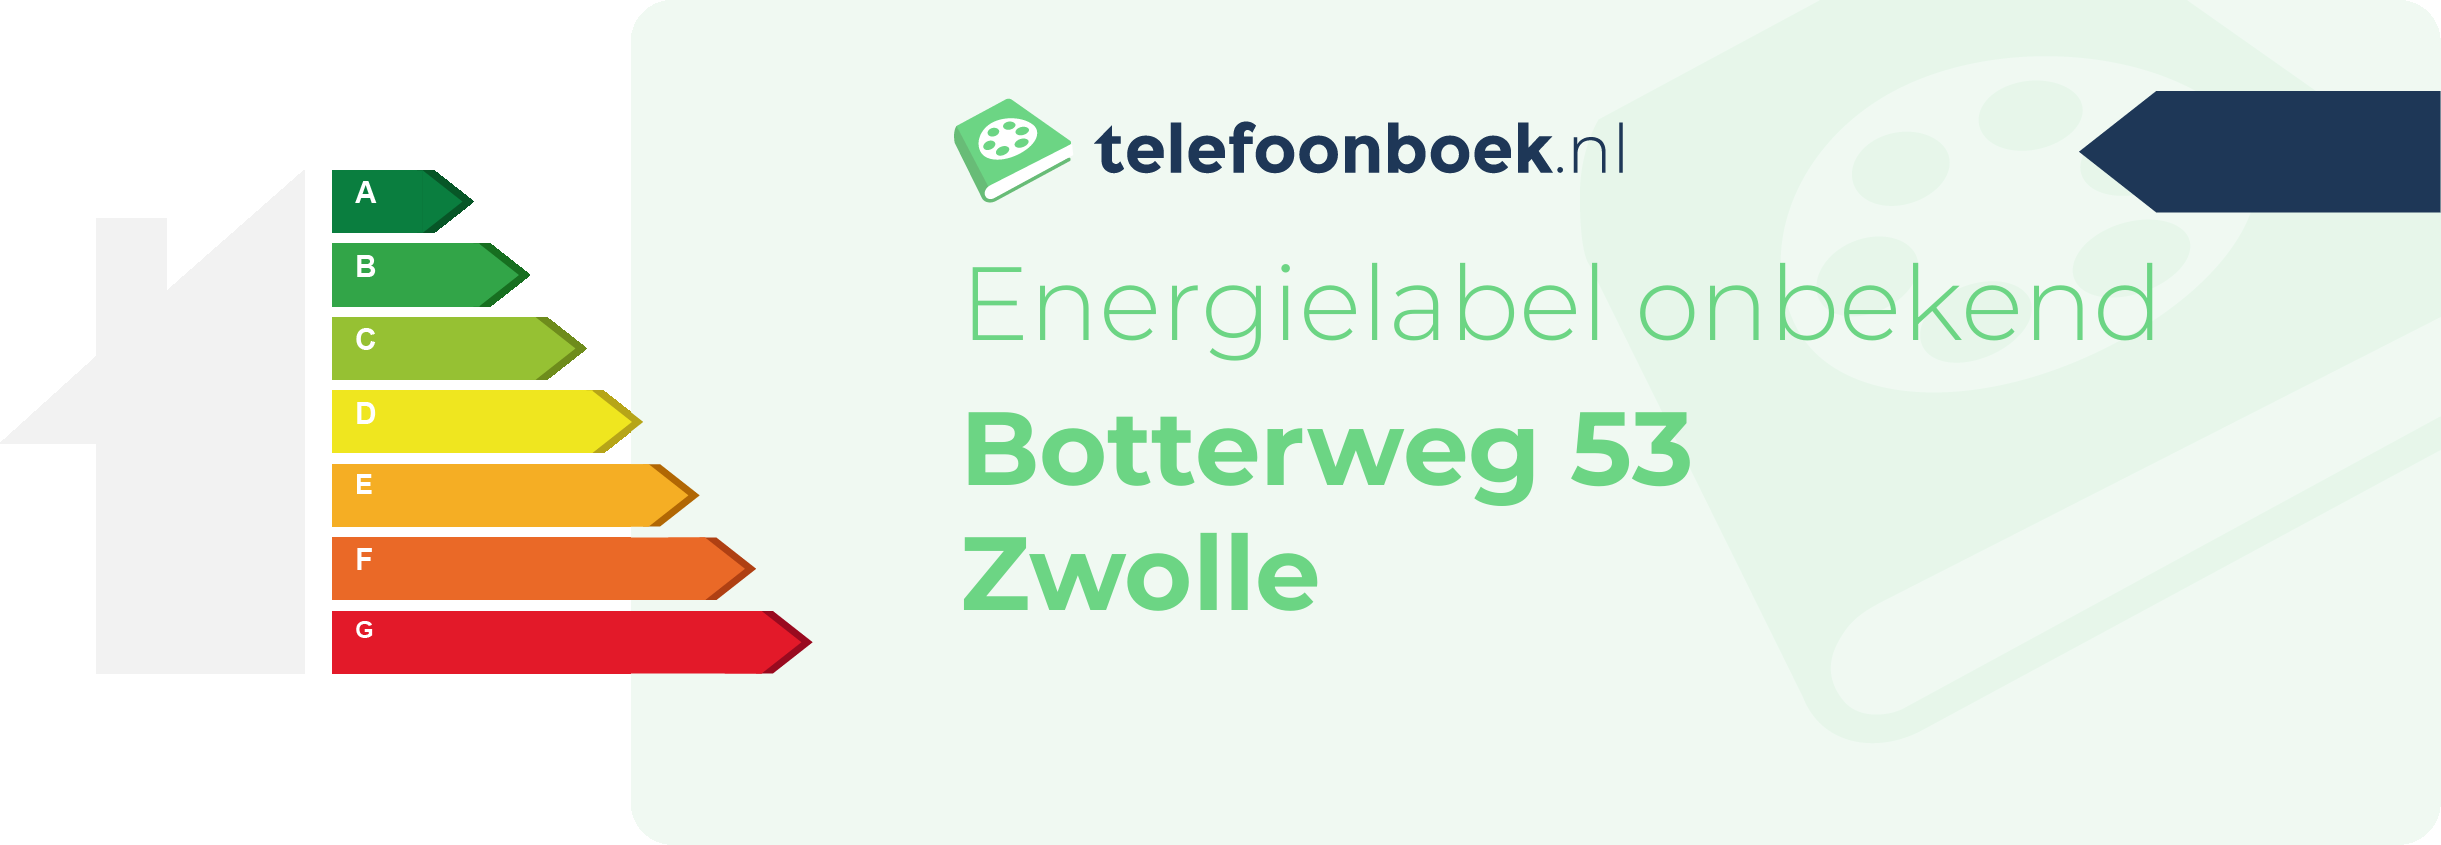 Energielabel Botterweg 53 Zwolle